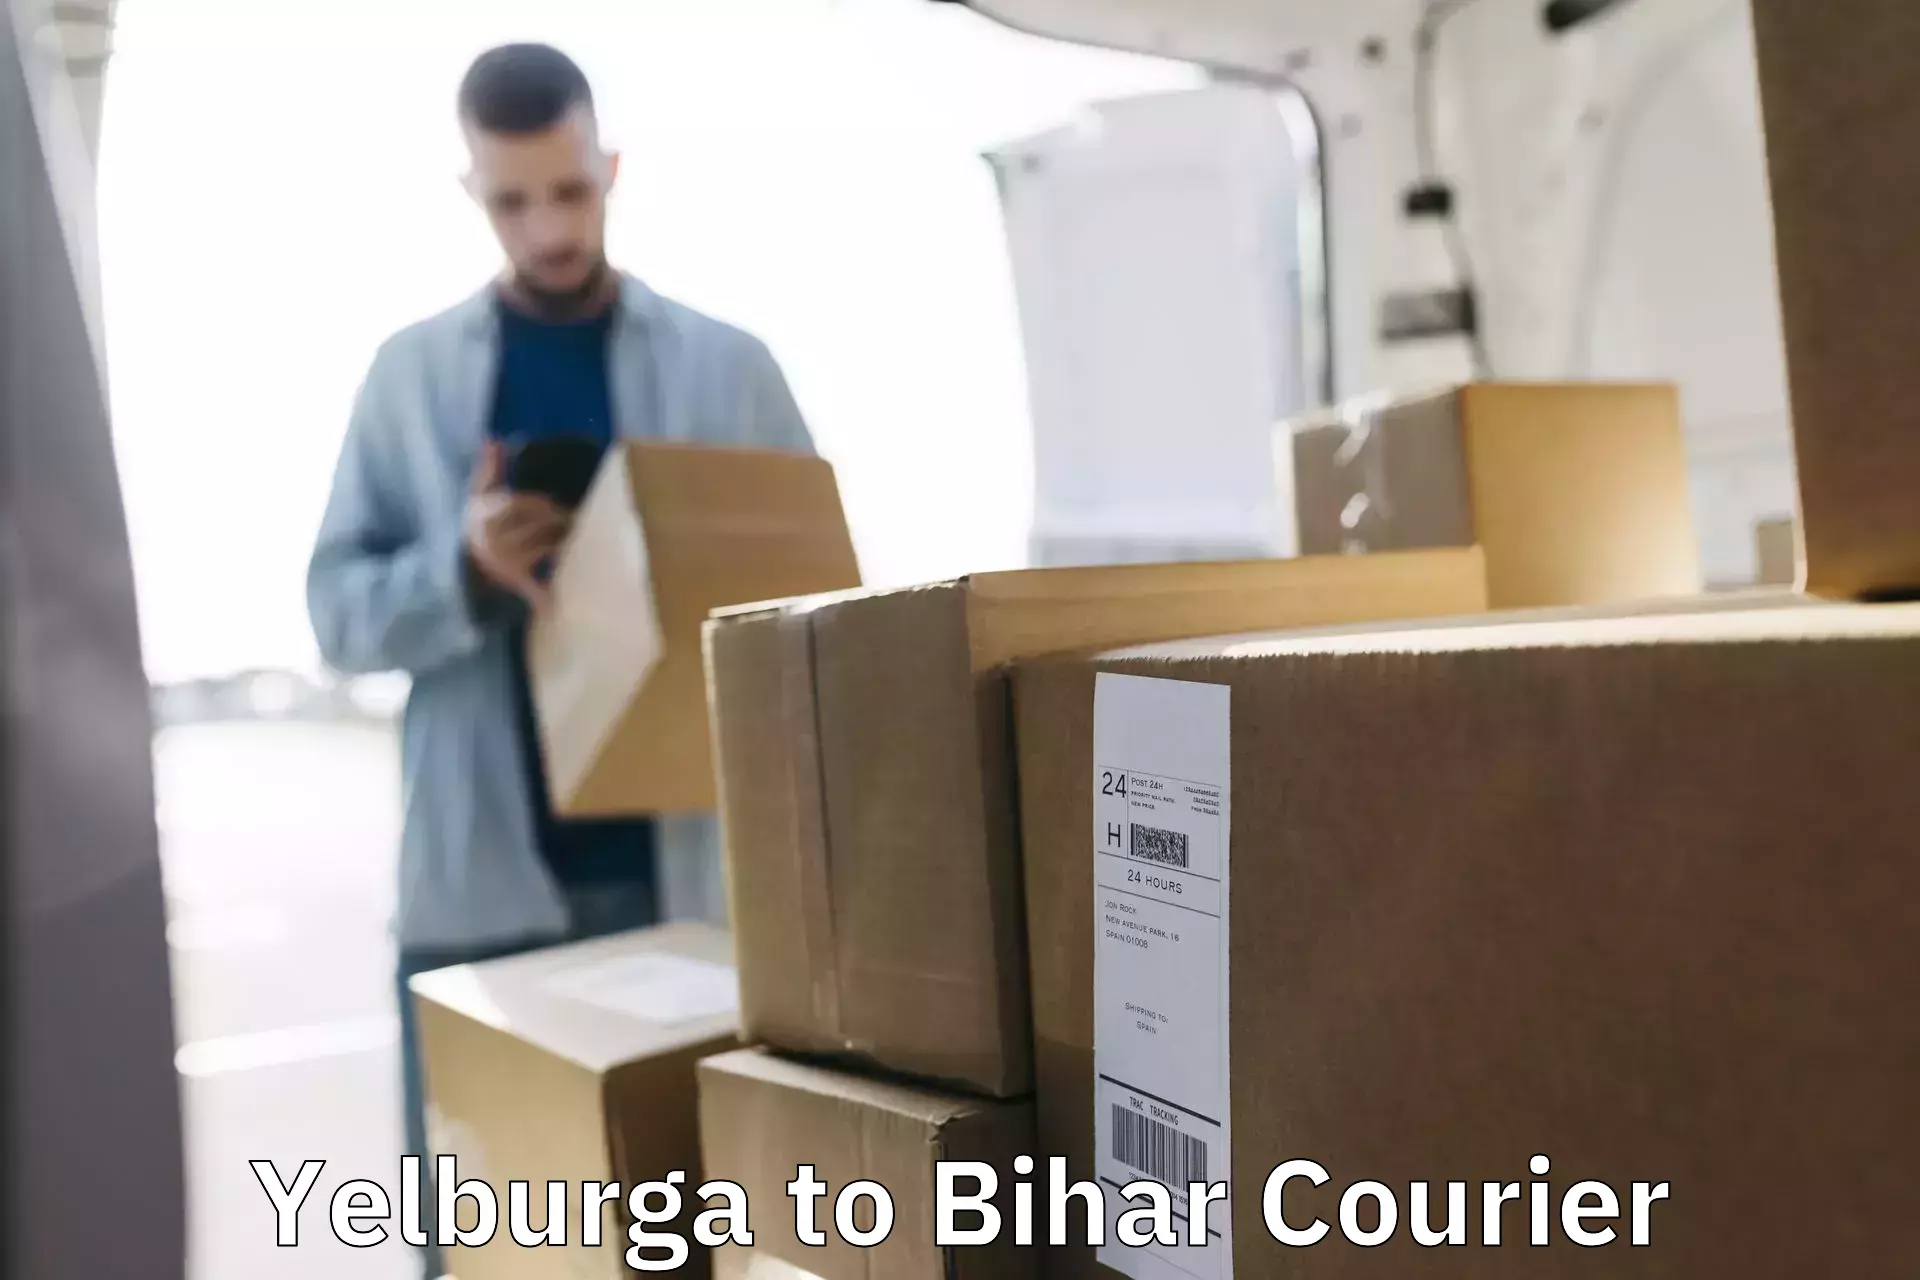 Courier service partnerships in Yelburga to Bihar